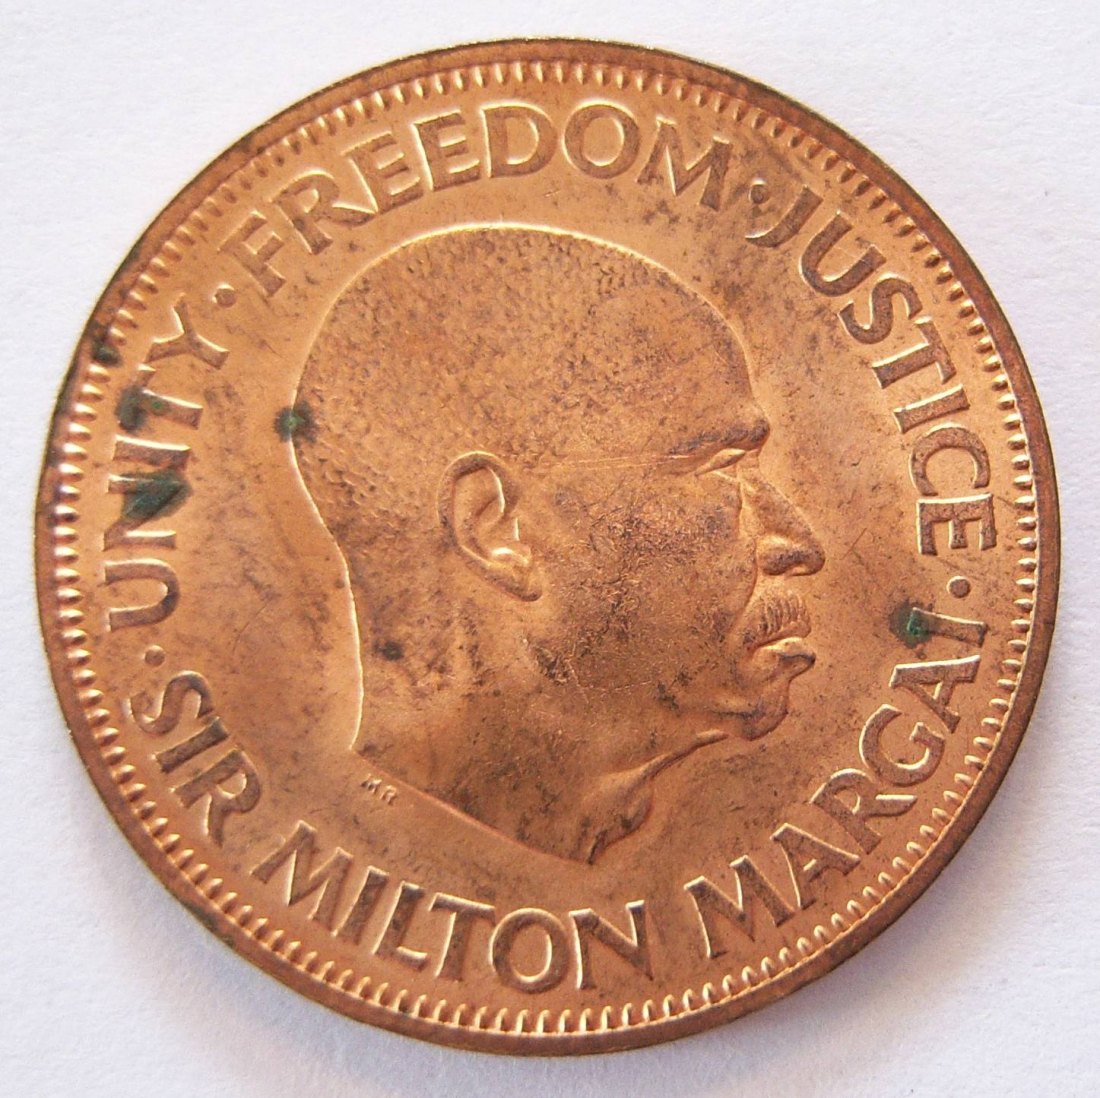  Sierra Leone 1 One Cent 1964   